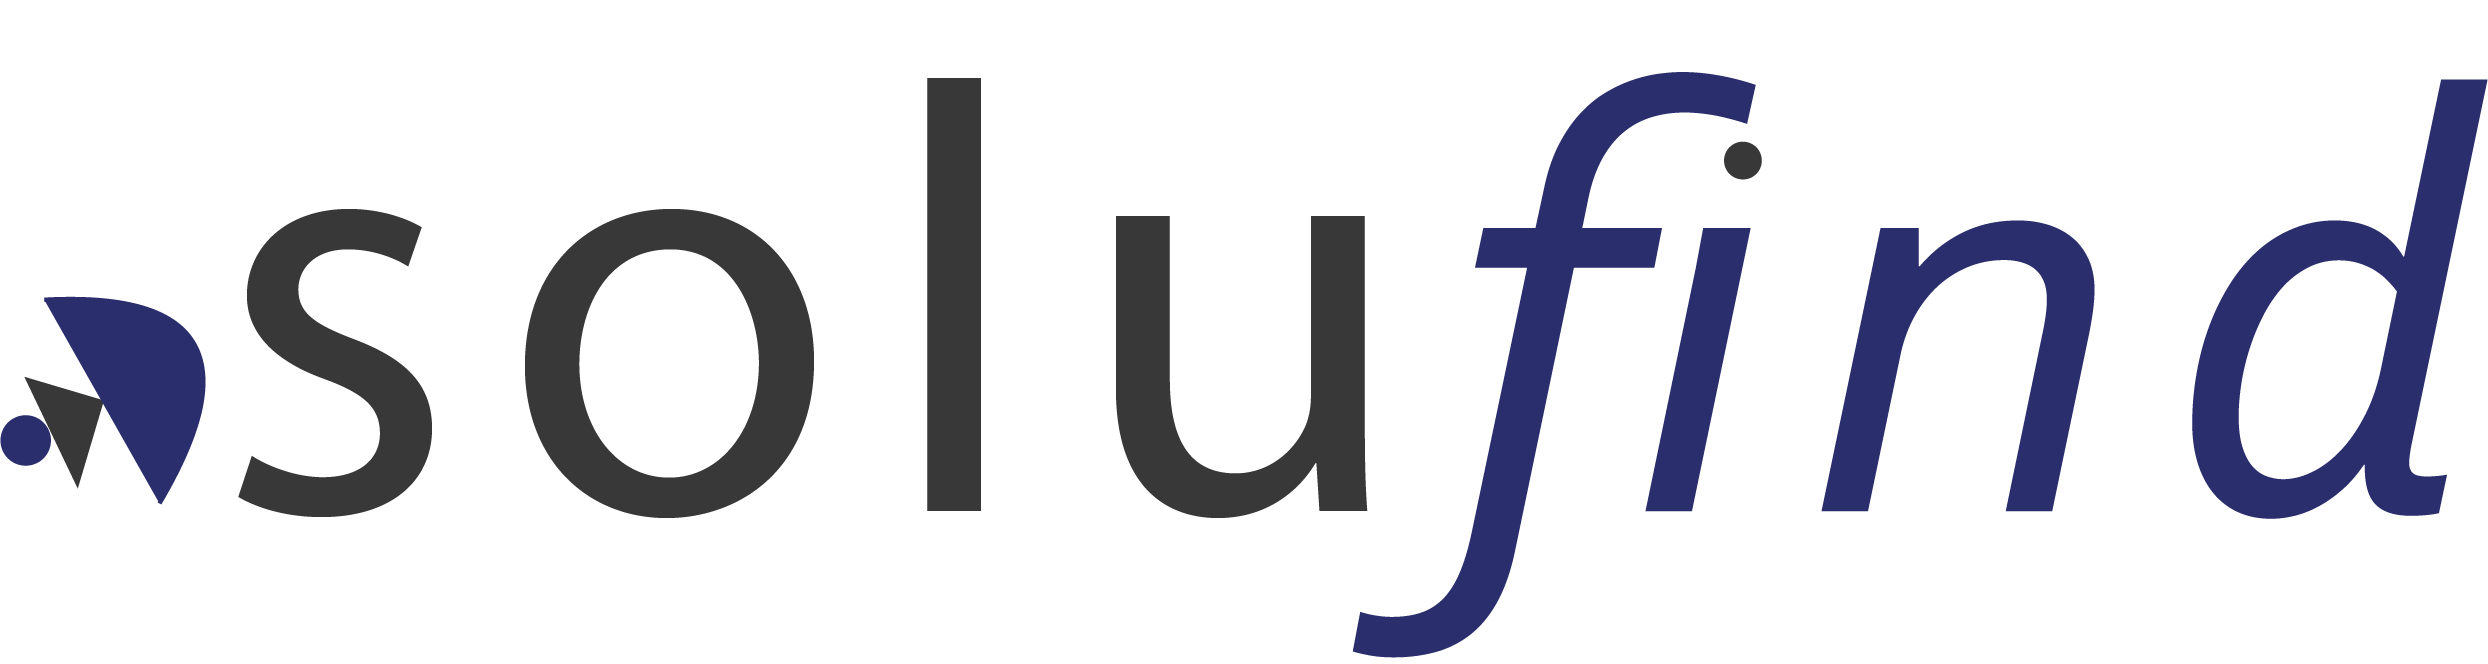 Gründer logo